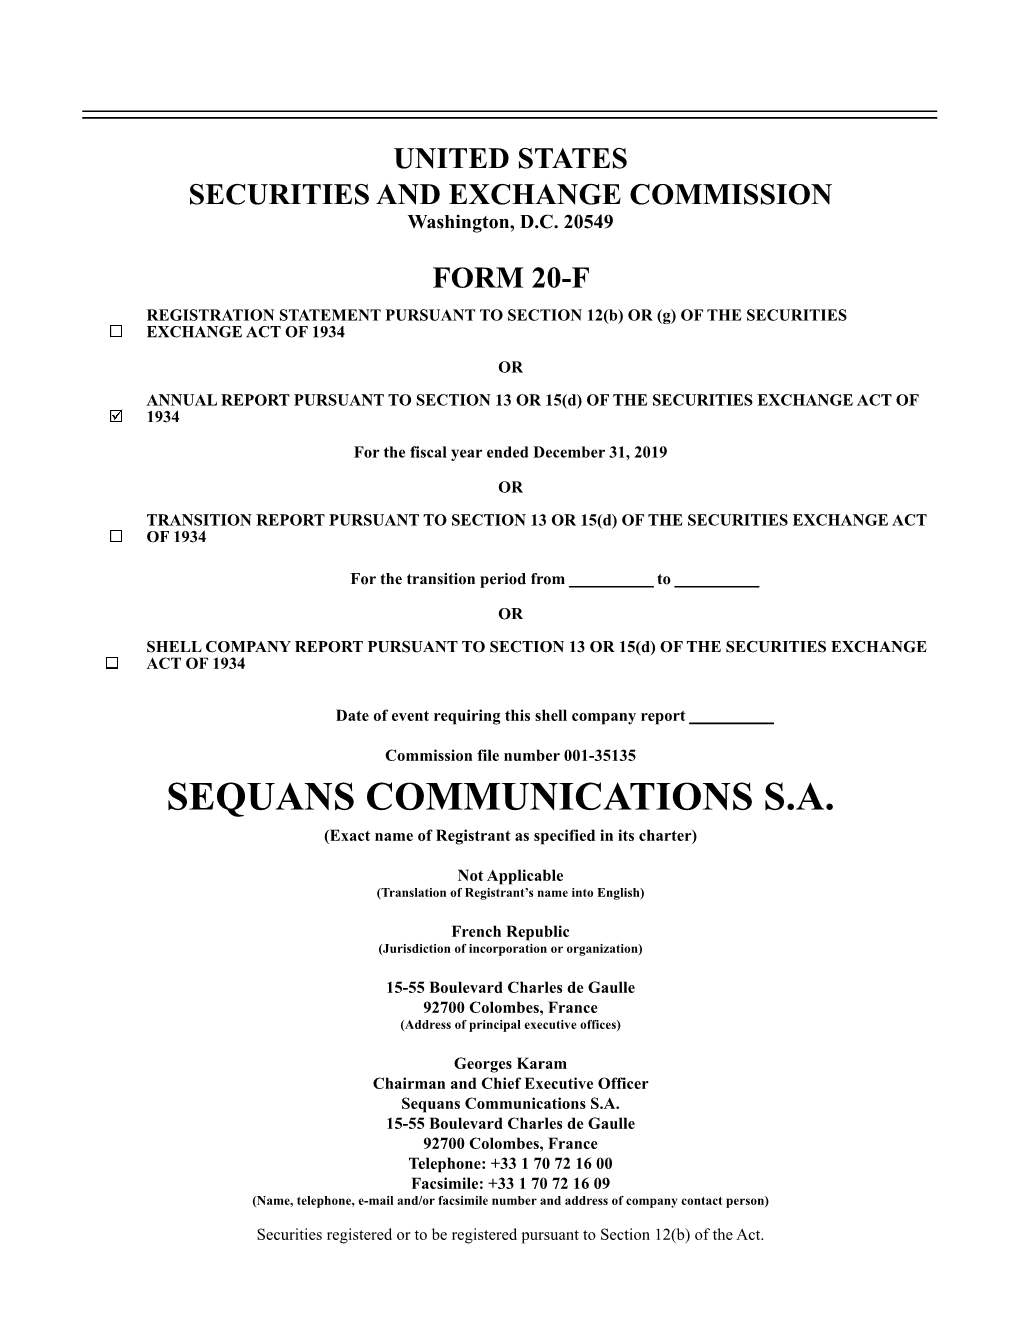 Sequans Communications-Form 20-F 2019